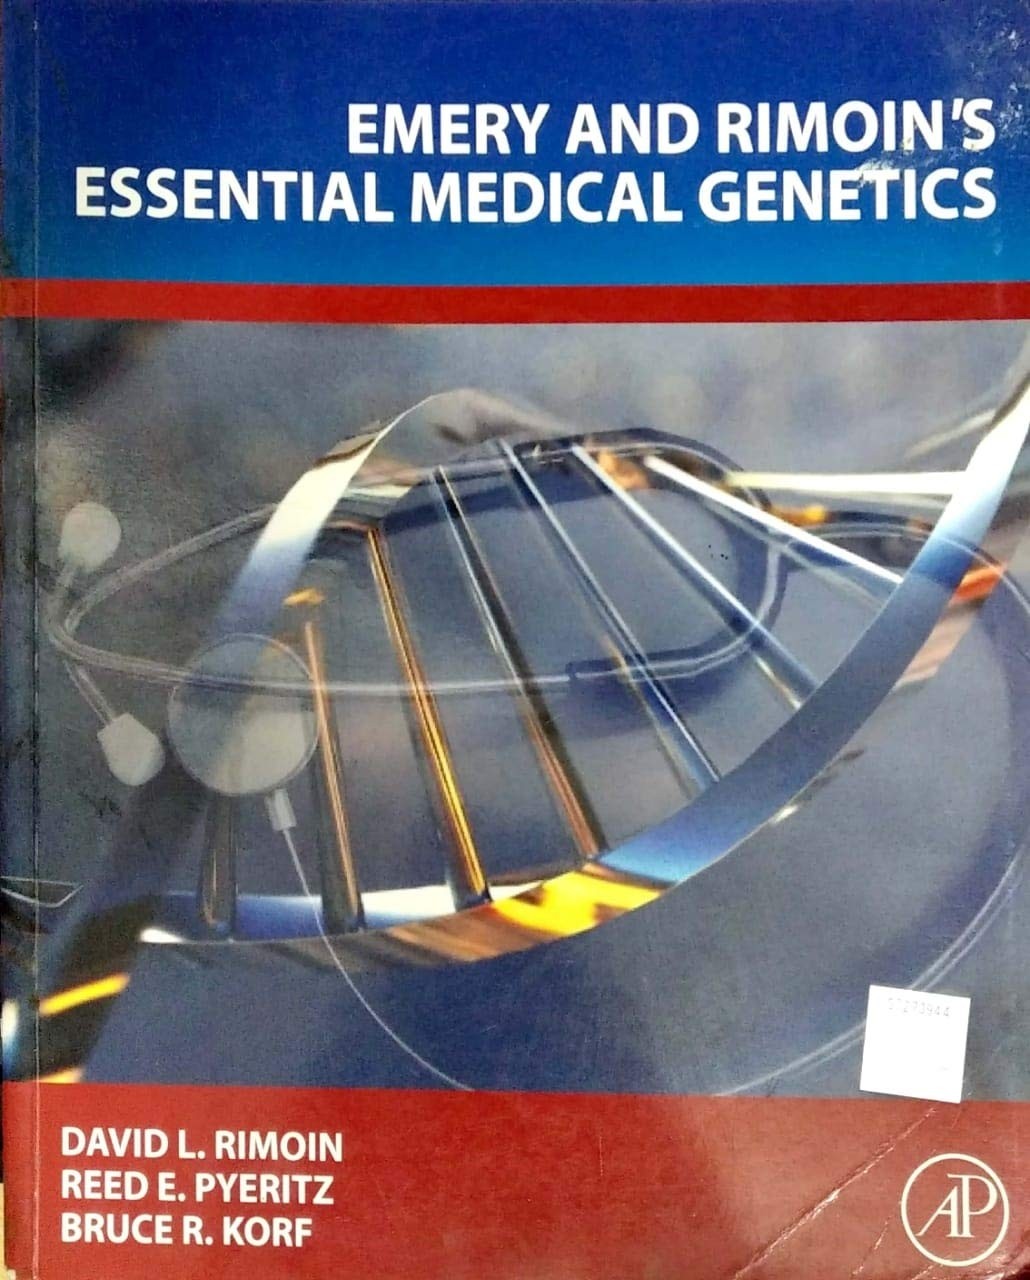 Emery & Rimoin's Essential Medical Genetics (Pub. Price: $ 249.95)